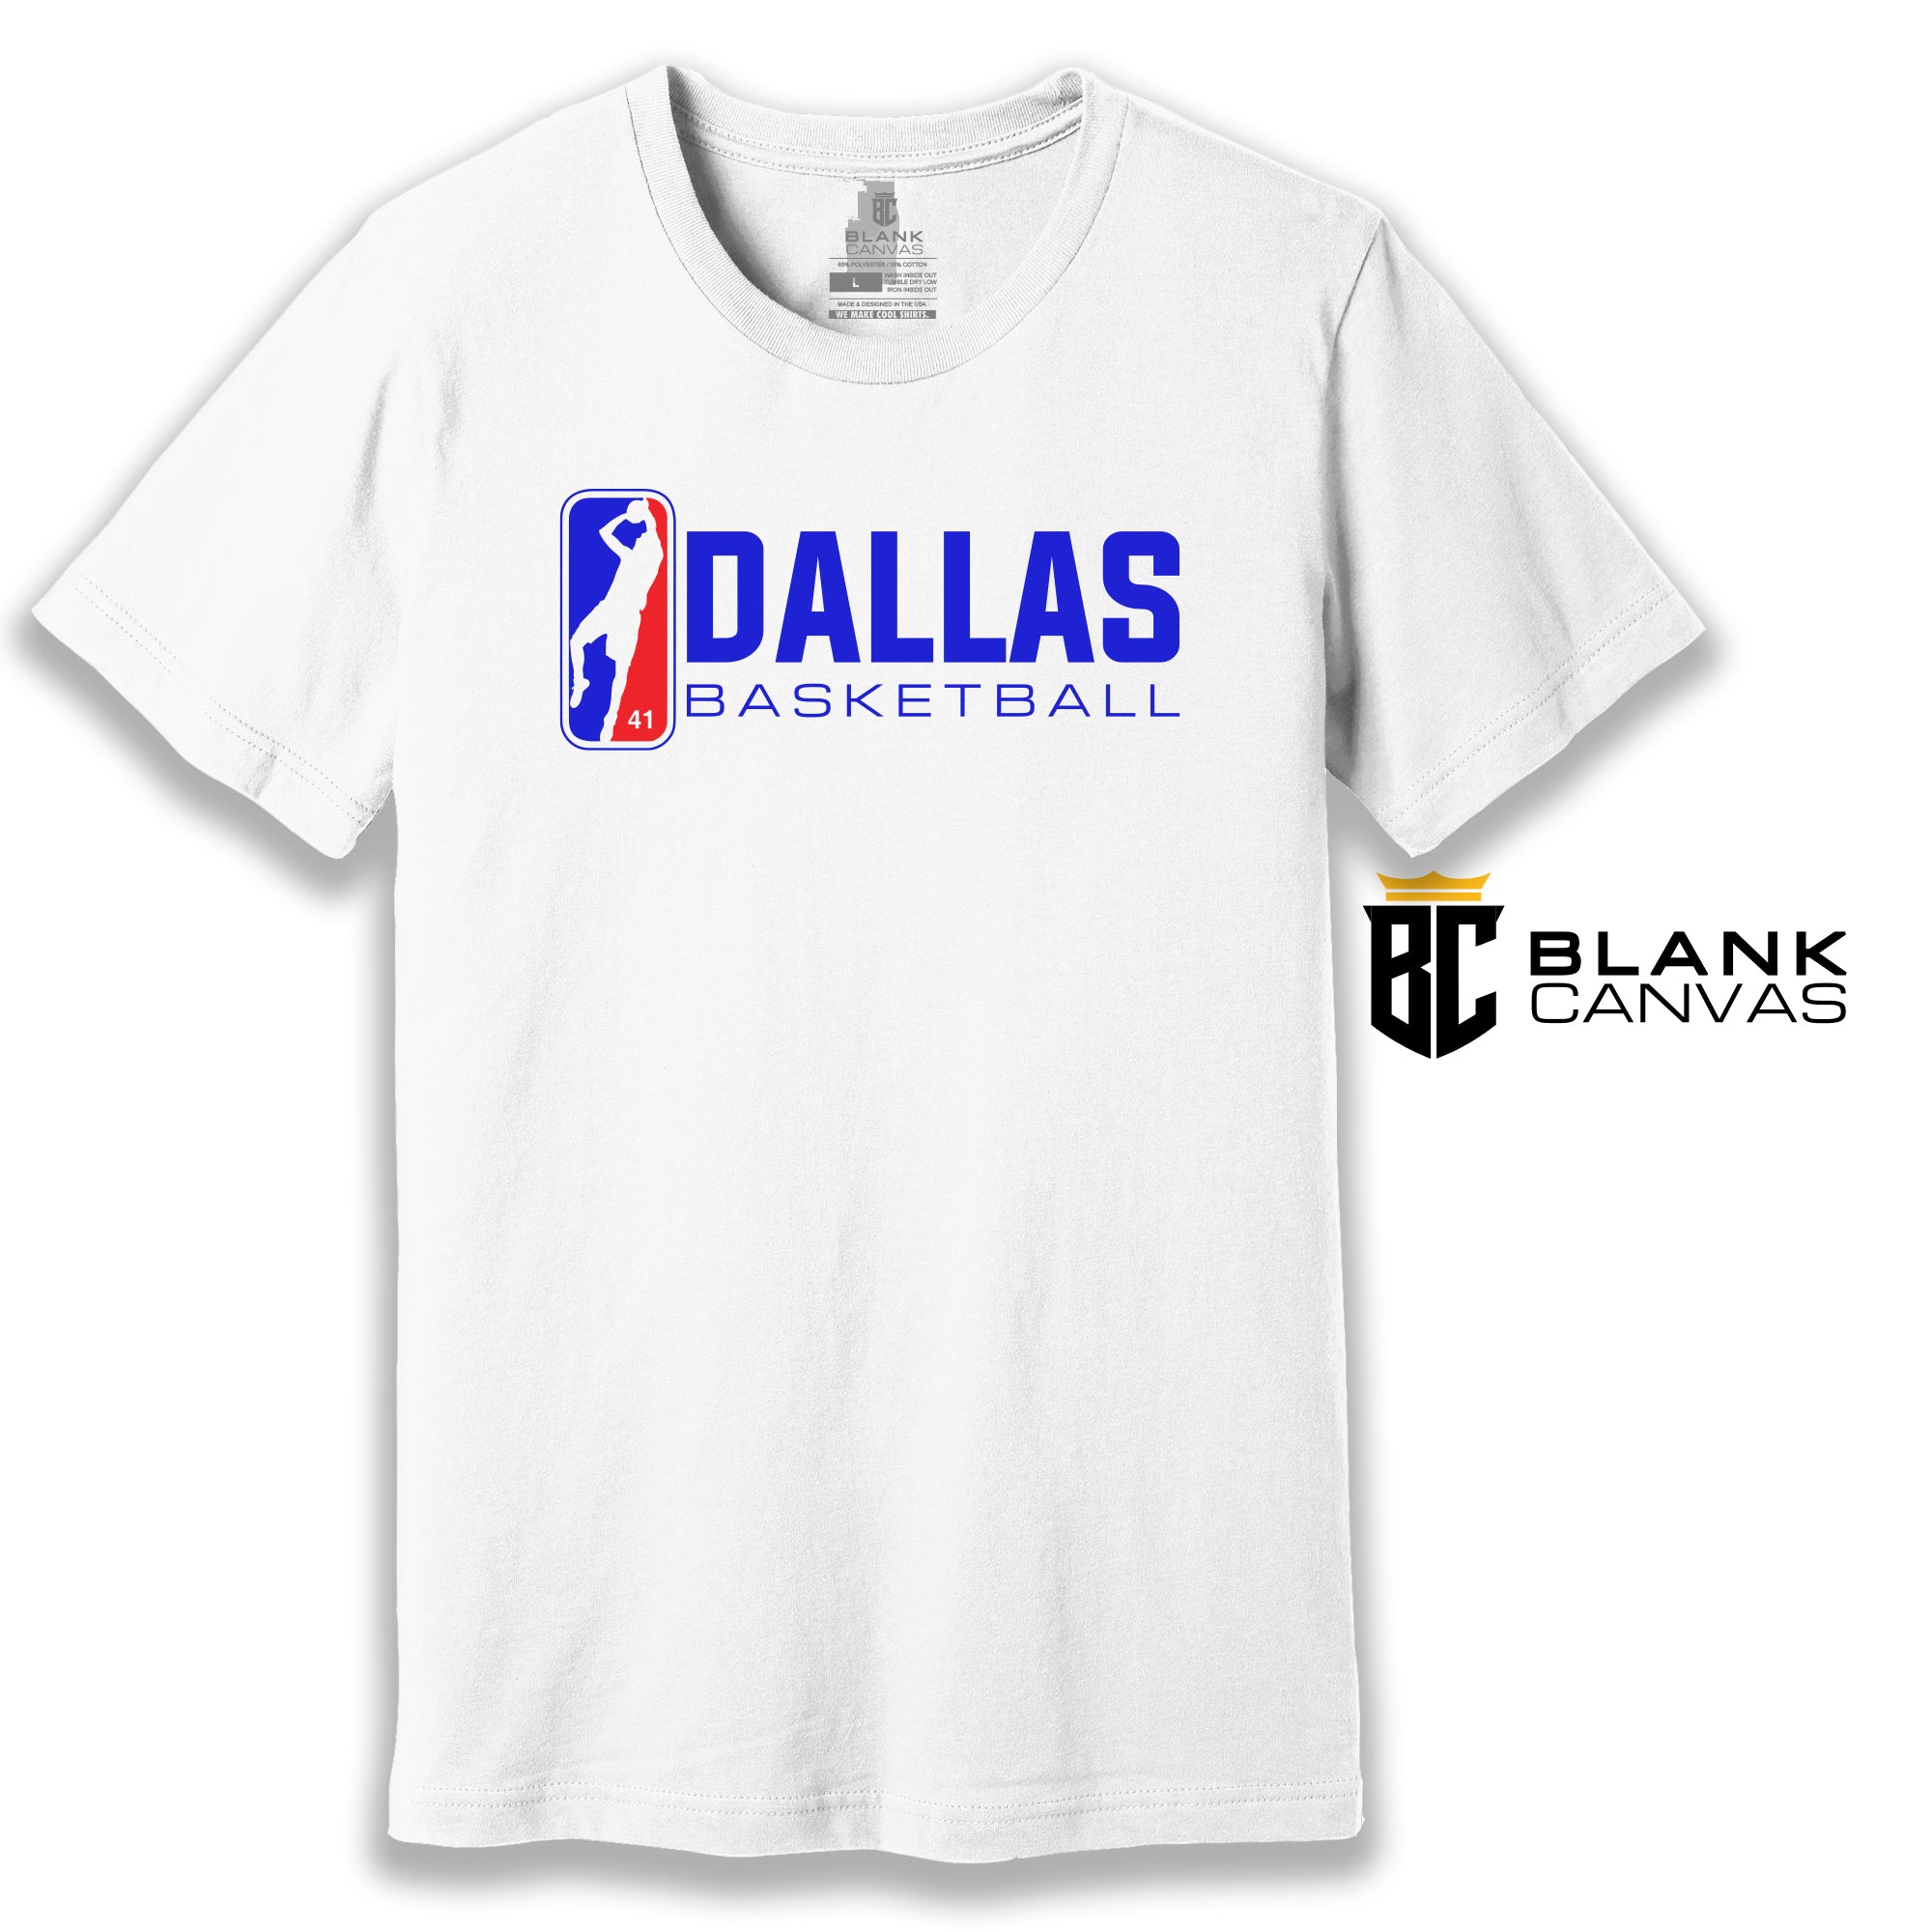 Cheap Dallas Mavericks Apparel, Discount Mavericks Gear, NBA Mavericks  Merchandise On Sale